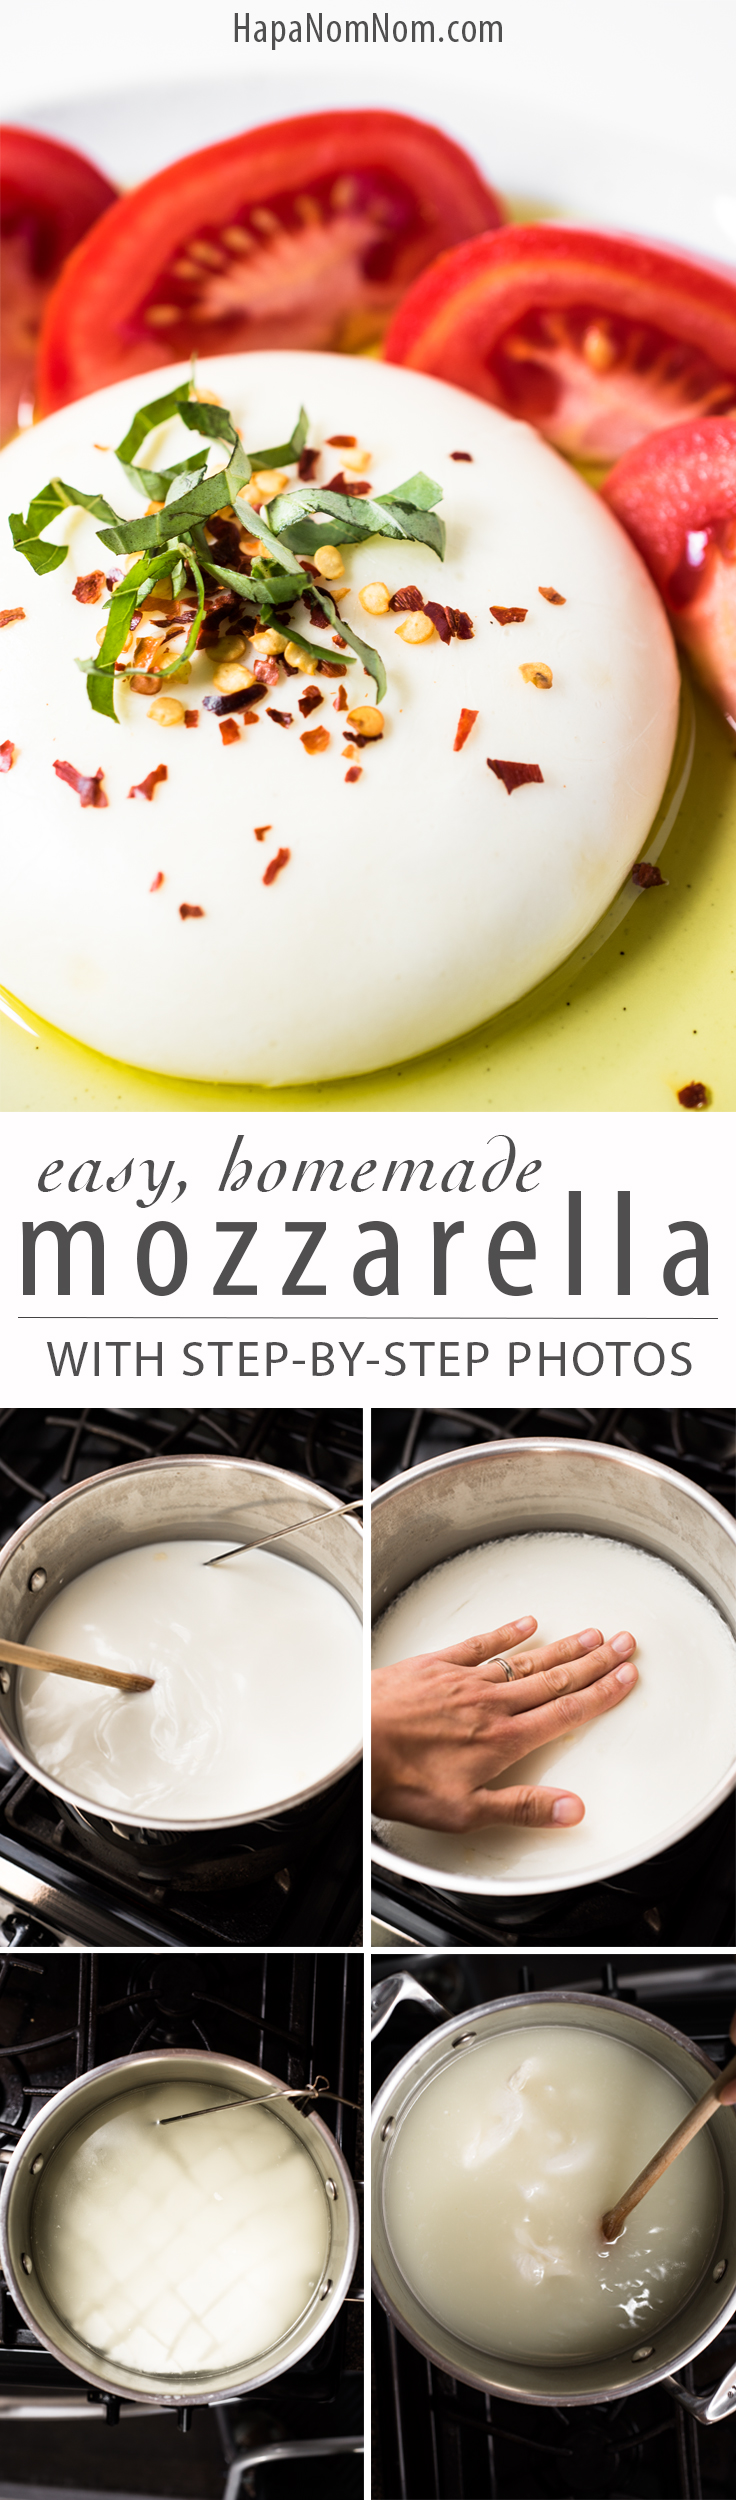 Make Homemade Mozzarella in just 30 Minutes!